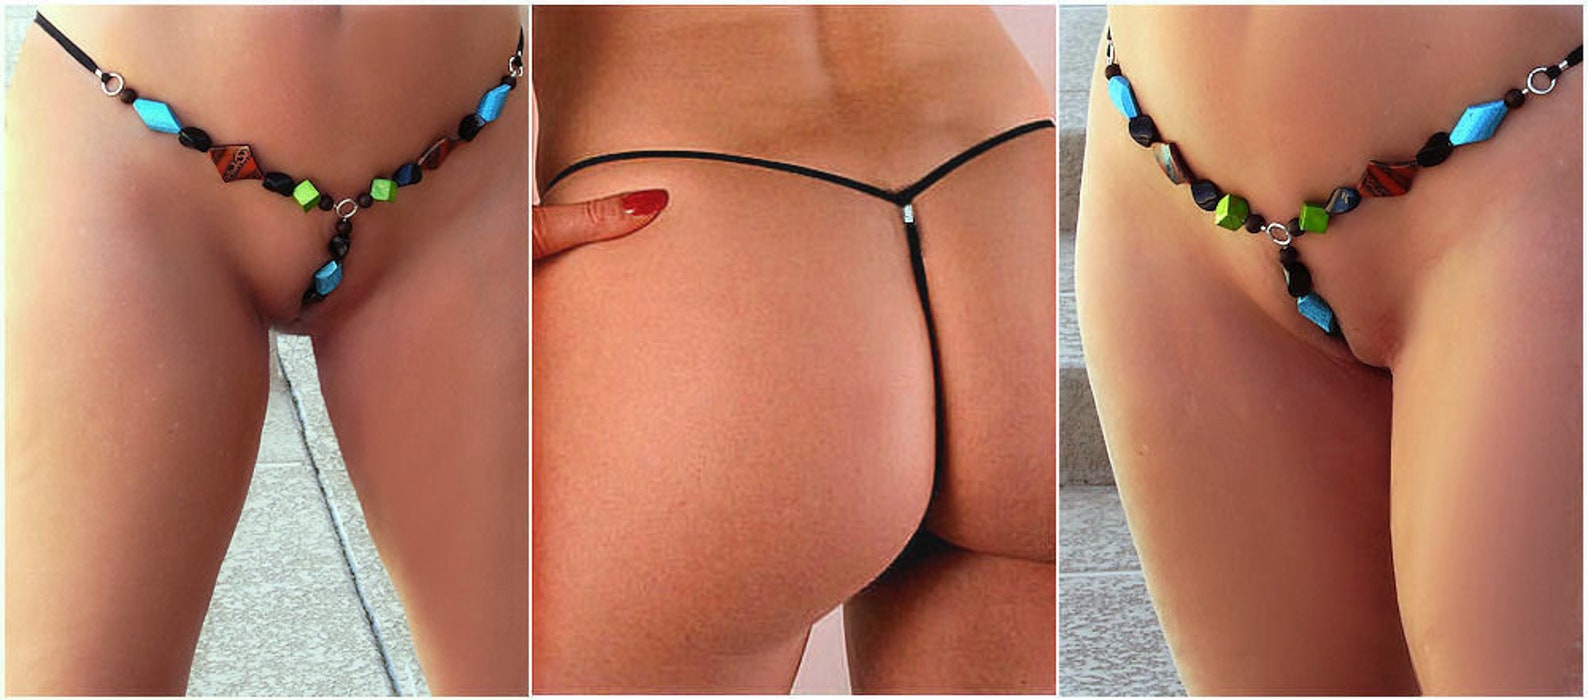 Dubio Bikini DLB-14 Crotchless Extreme Bikini G-String Beaded image 0.